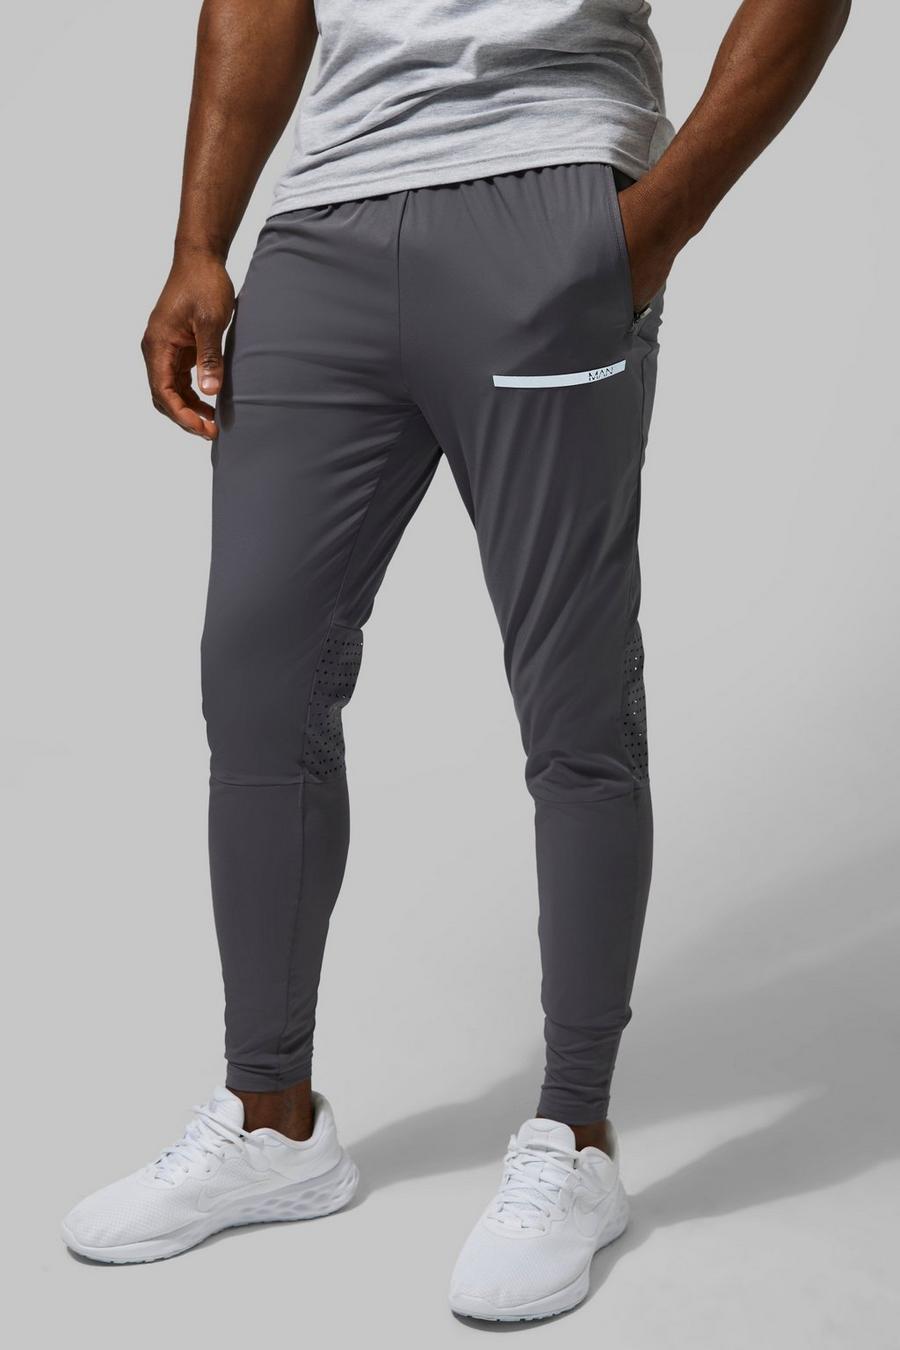 Pantaloni tuta Man Active perforati per alta performance, Charcoal grigio